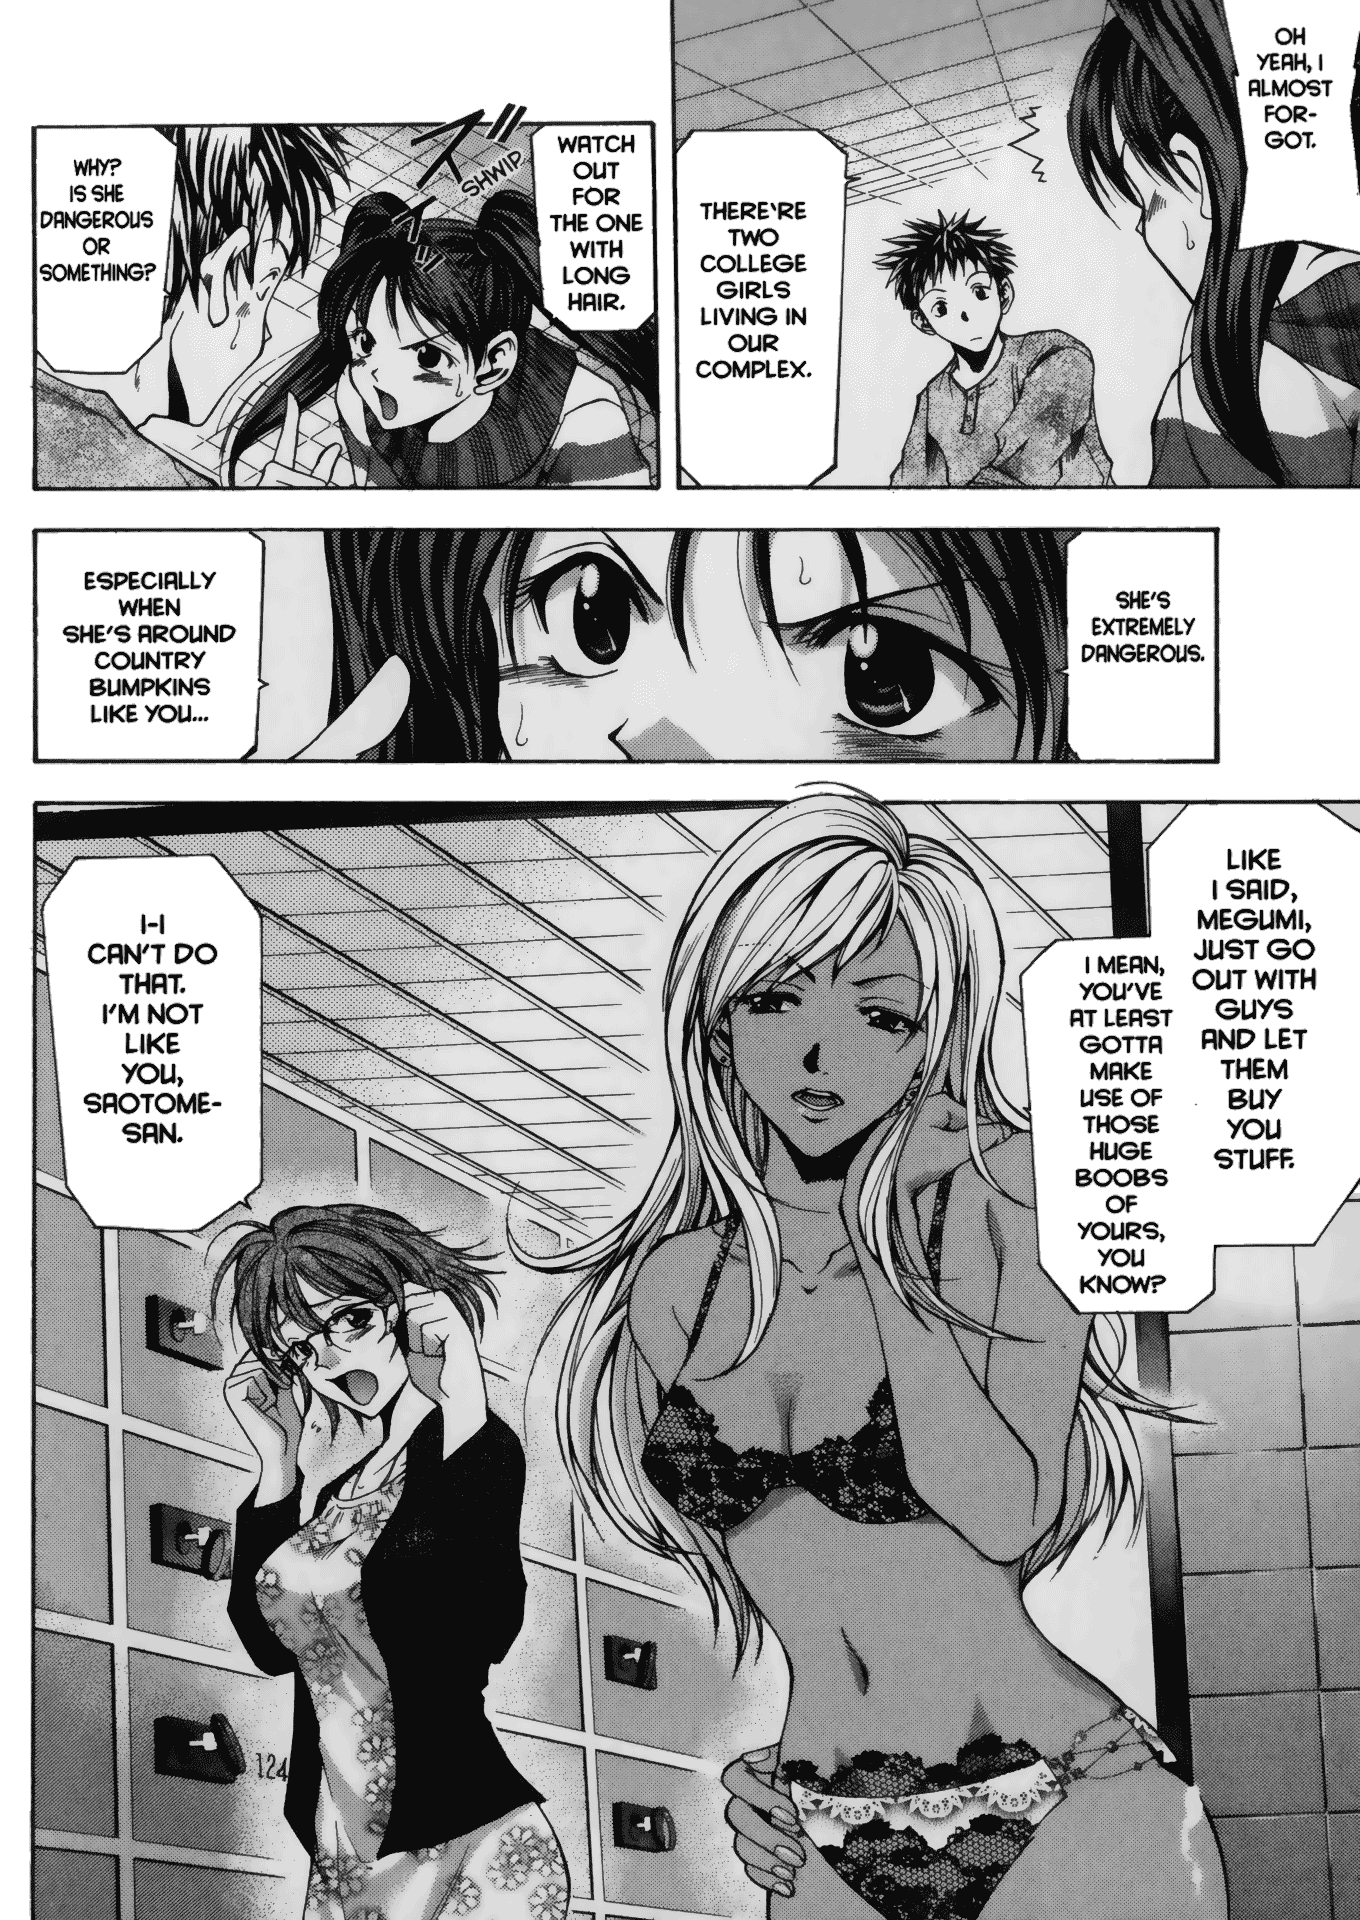 Best manga with nudity